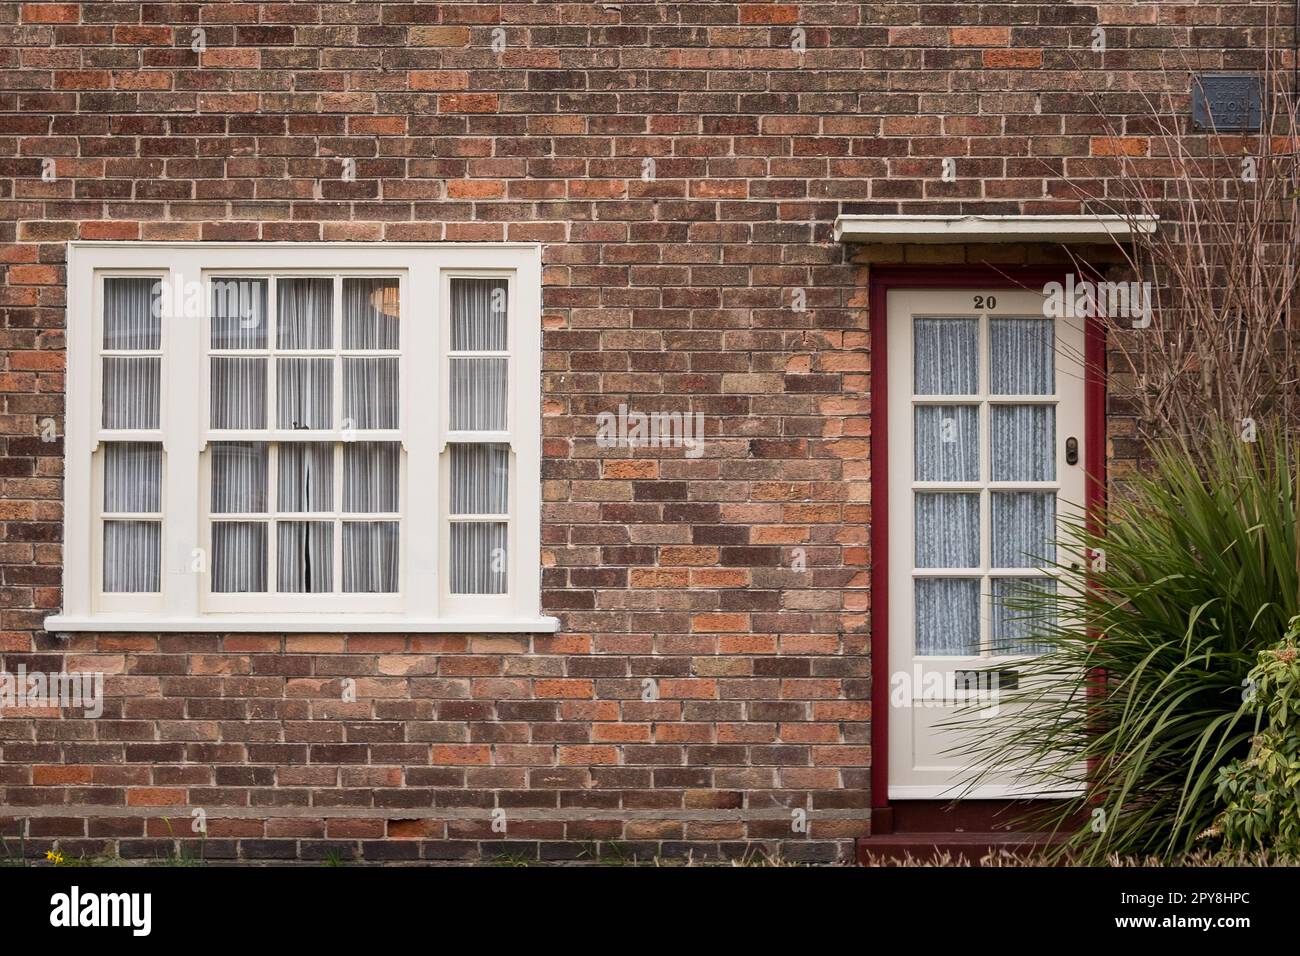 20 Forthlin Road, Allerton, Liverpool è la casa d'infanzia di Sir Paul McCartney dei Beatles Foto Stock